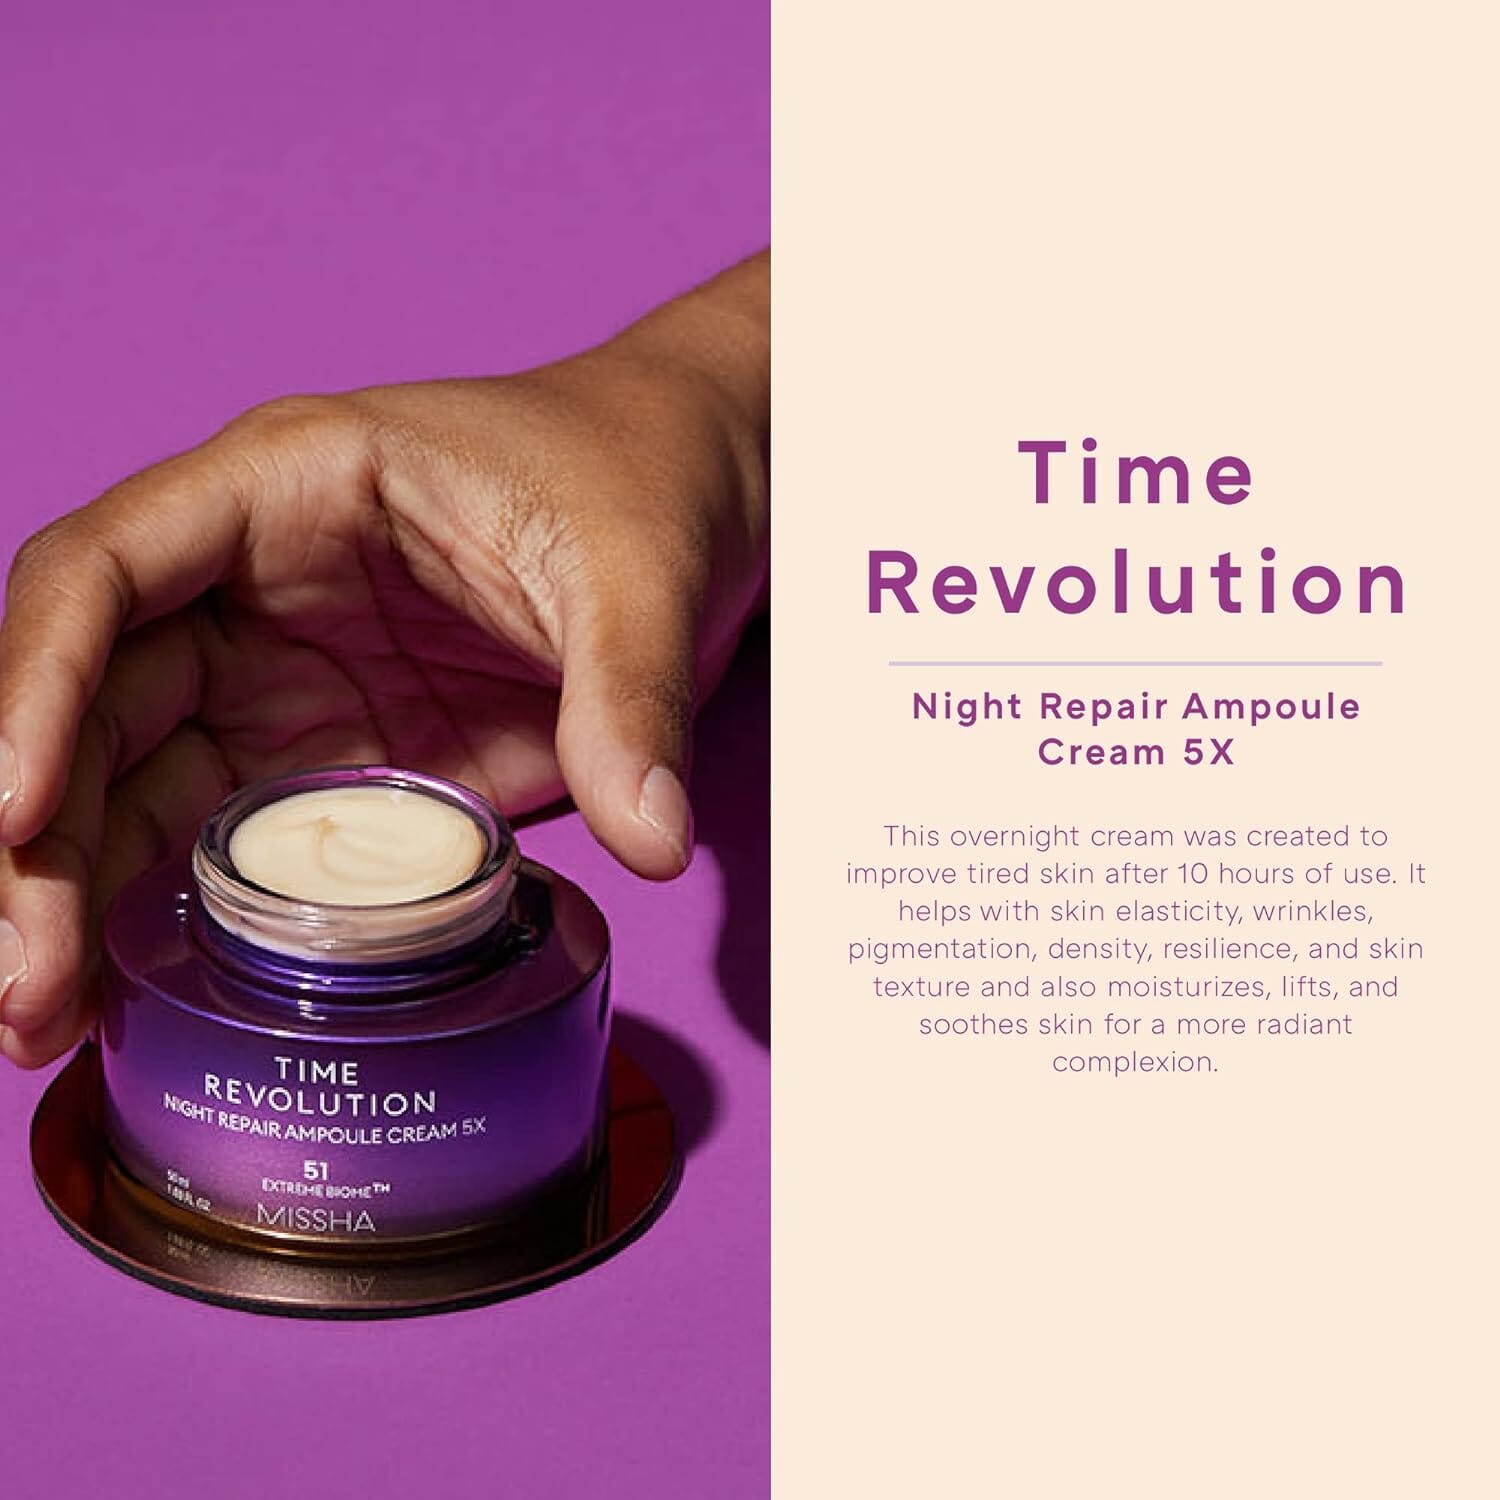 MIssha Time Revolution Night Repair Ampoule Cream 5X Skin Care Missha ORION XO Sri Lanka